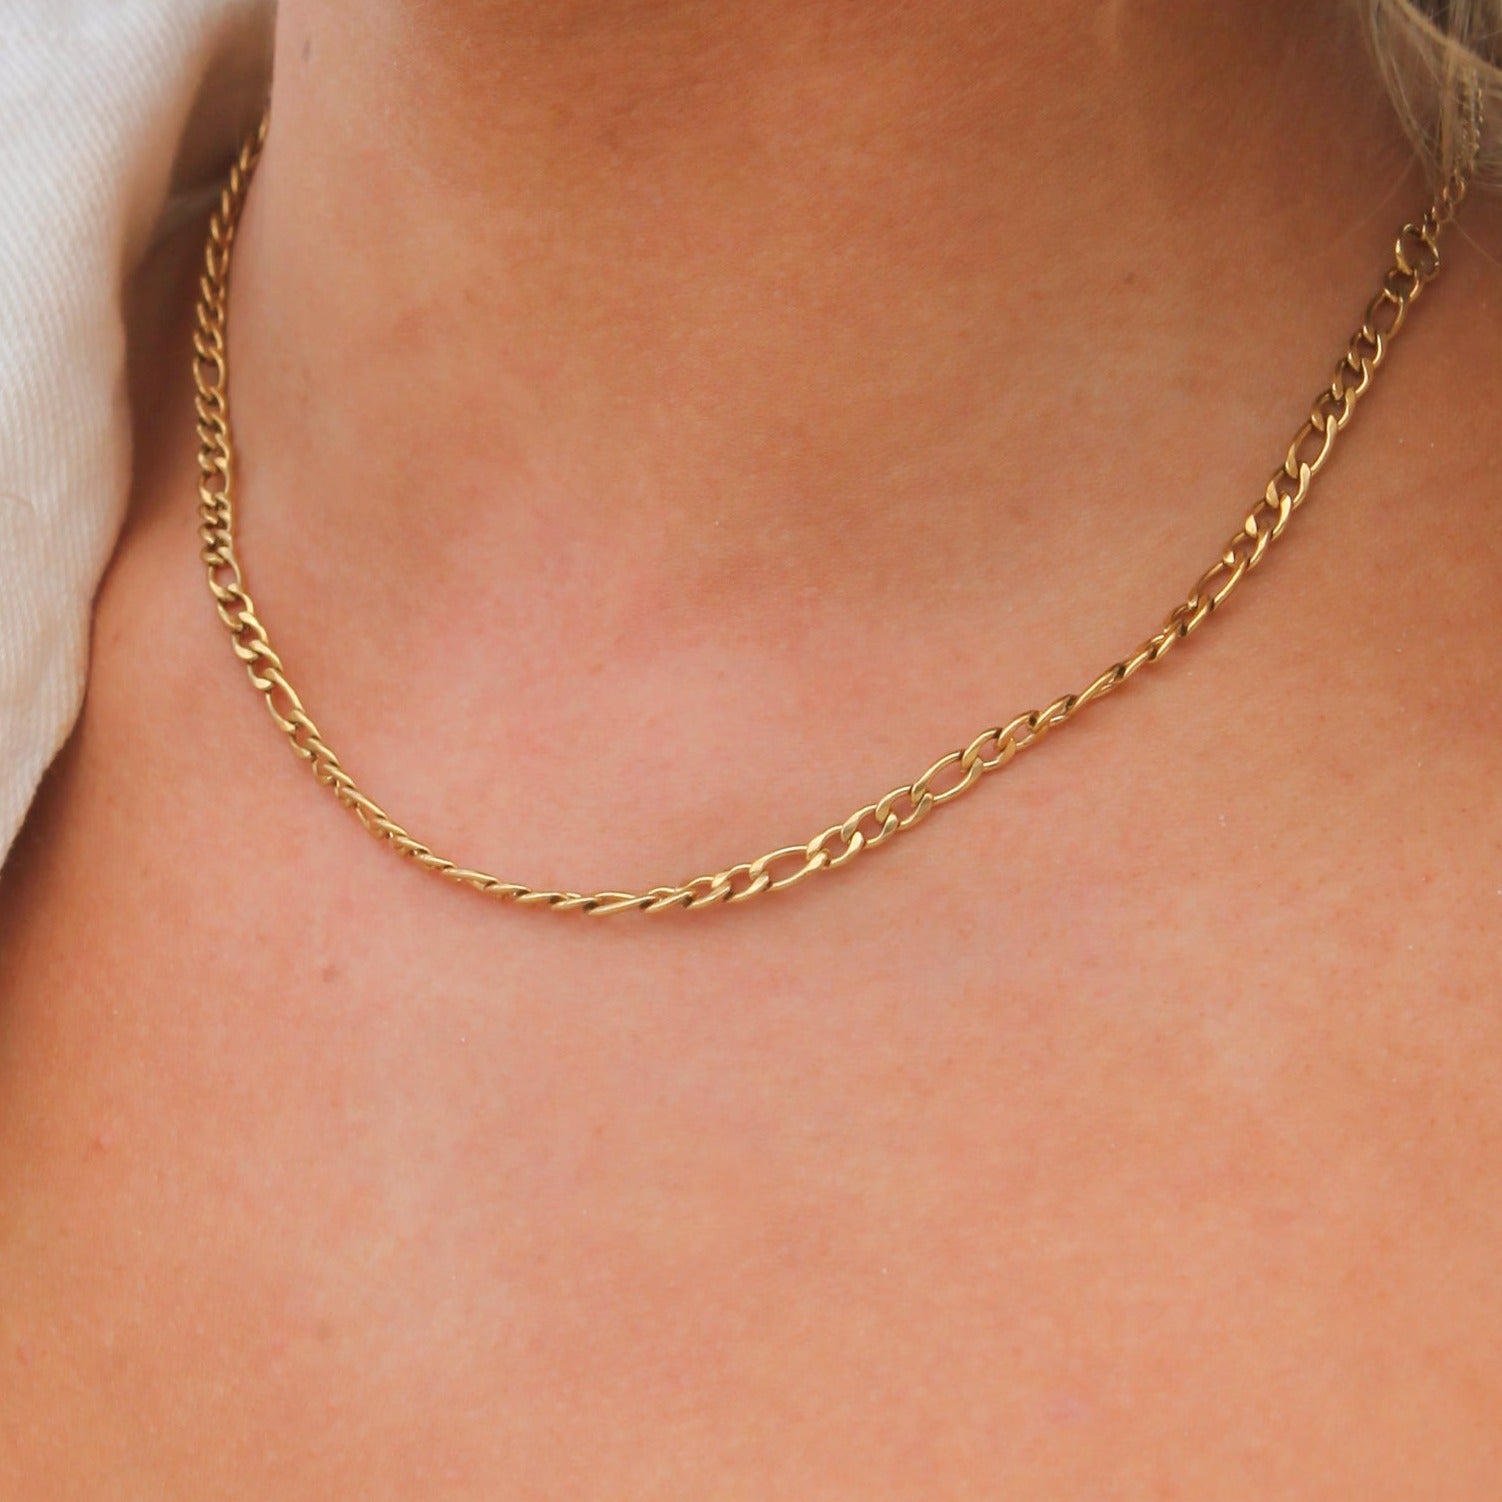 Cameron - 18k Gold Necklace